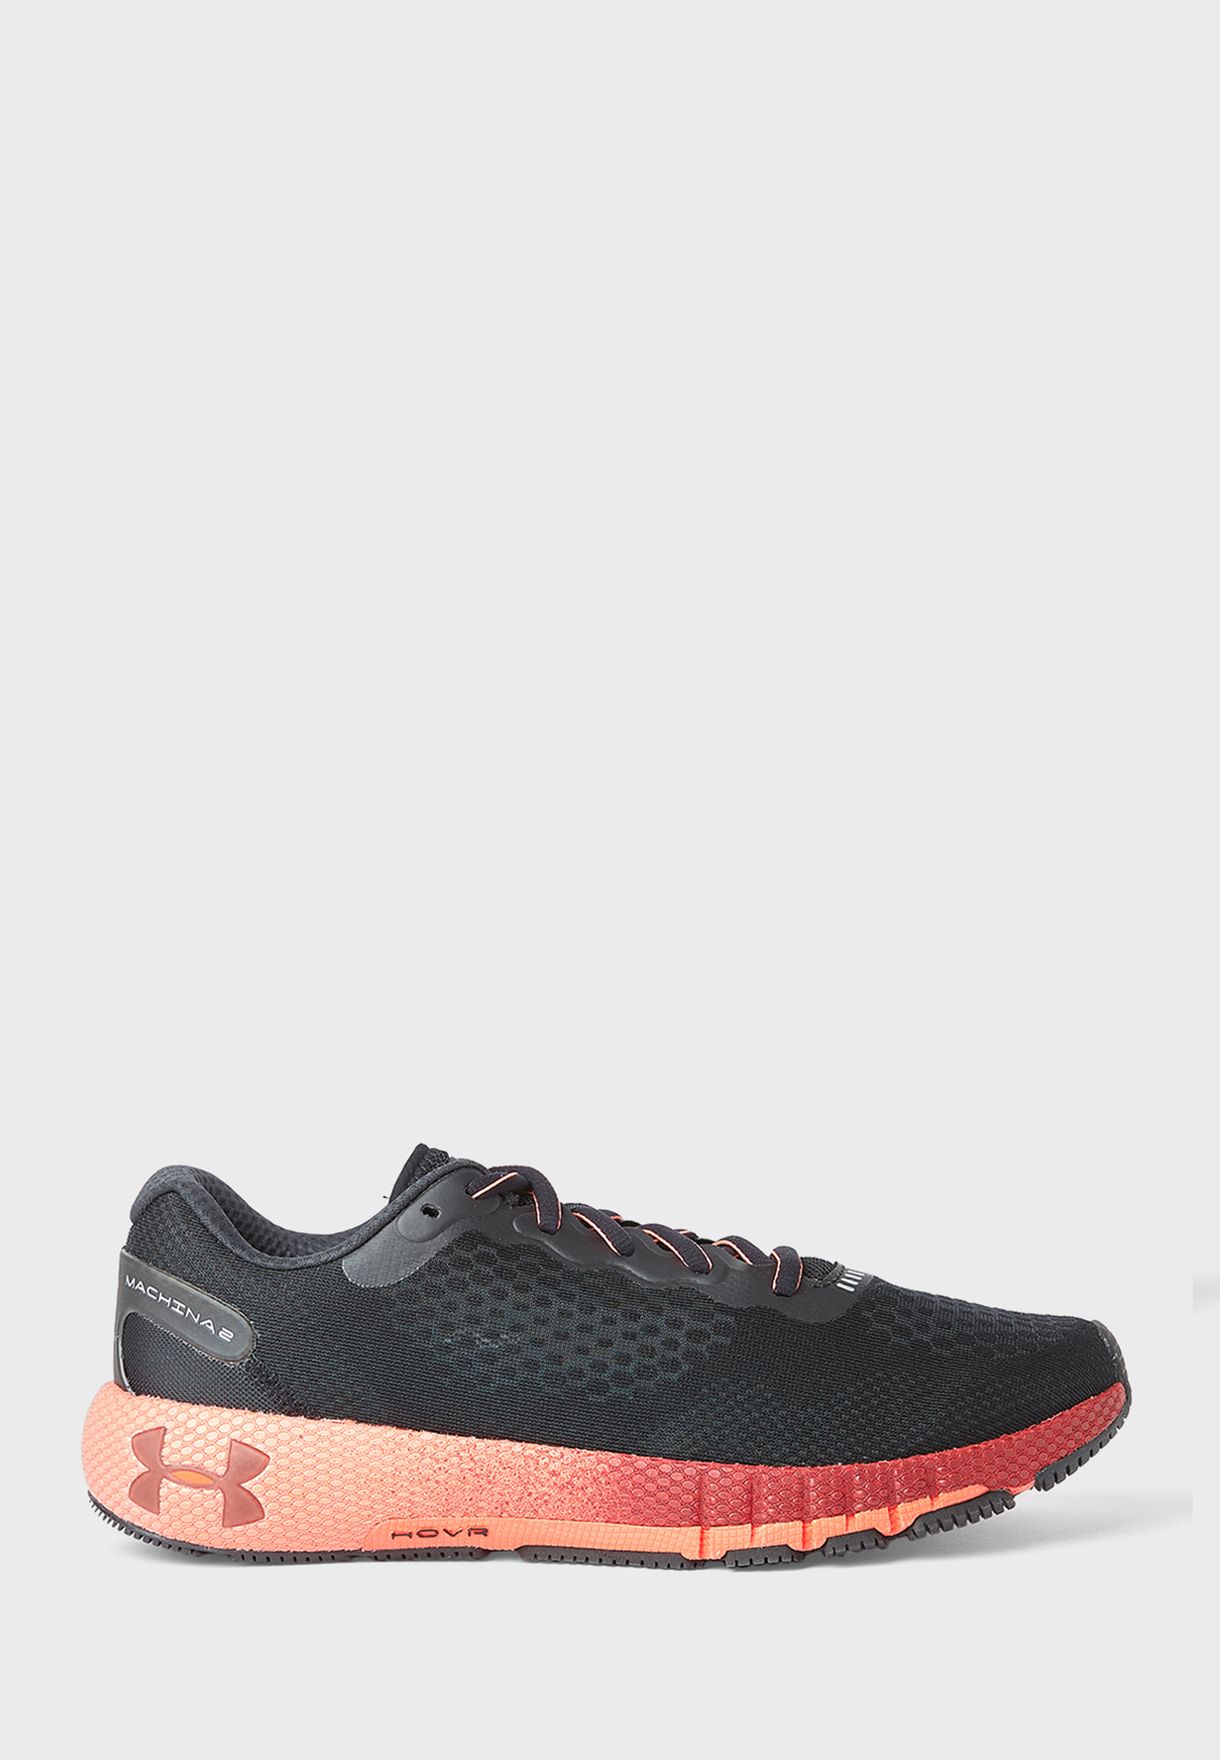 Hovr Machina 2 Colorshift Running Shoes